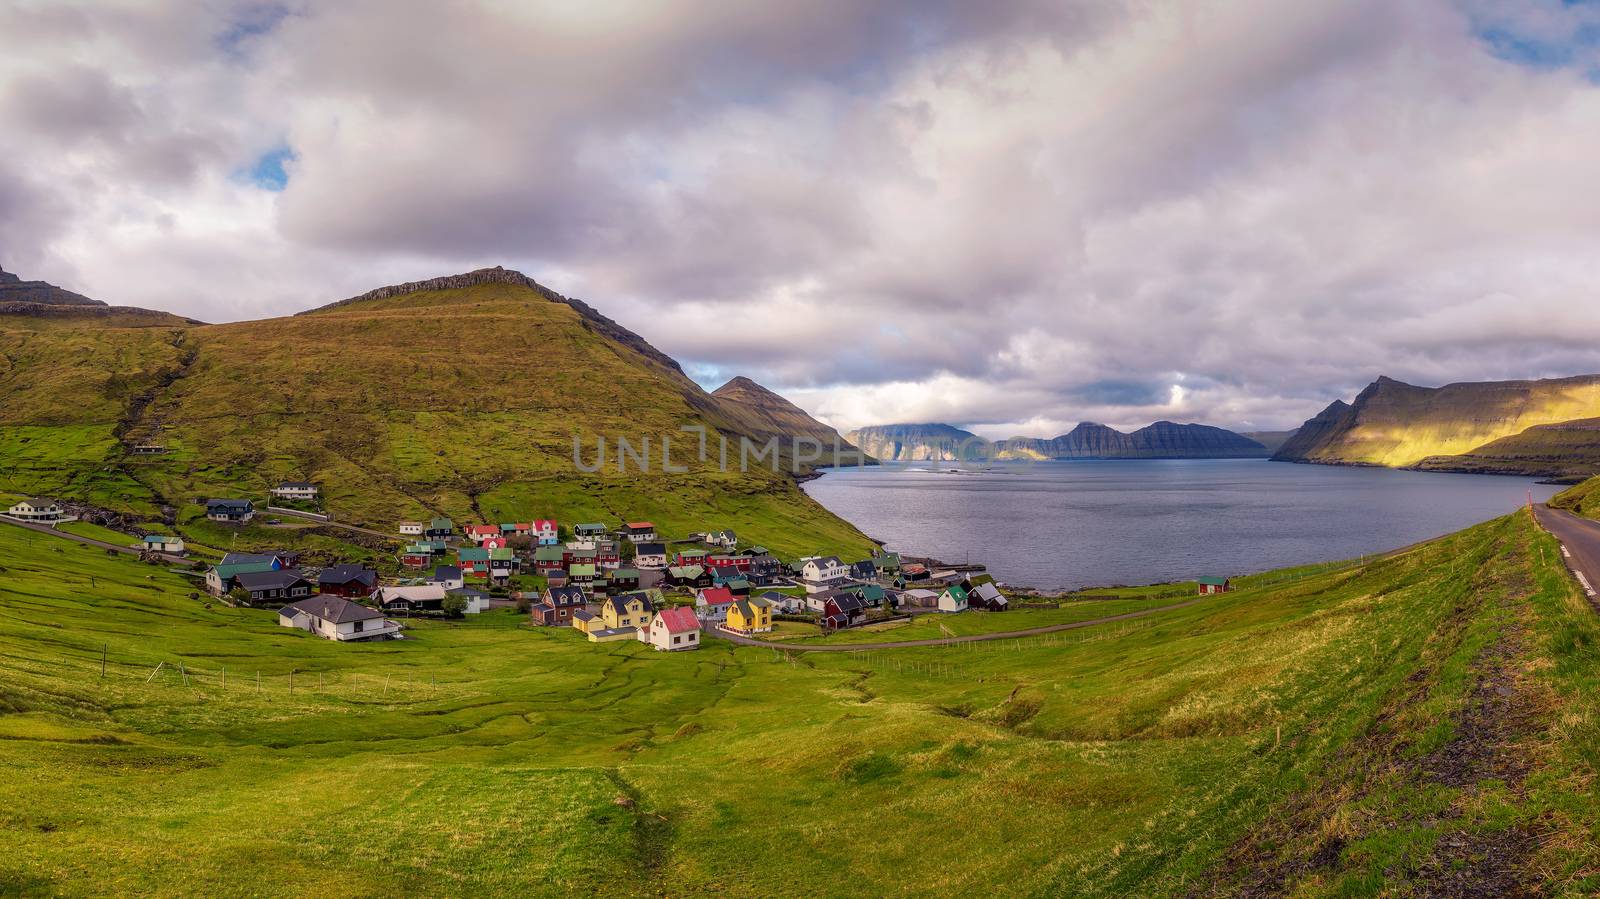 Panorama of mountains and ocean around village of Funningur on Faroe Islands, Denmark.